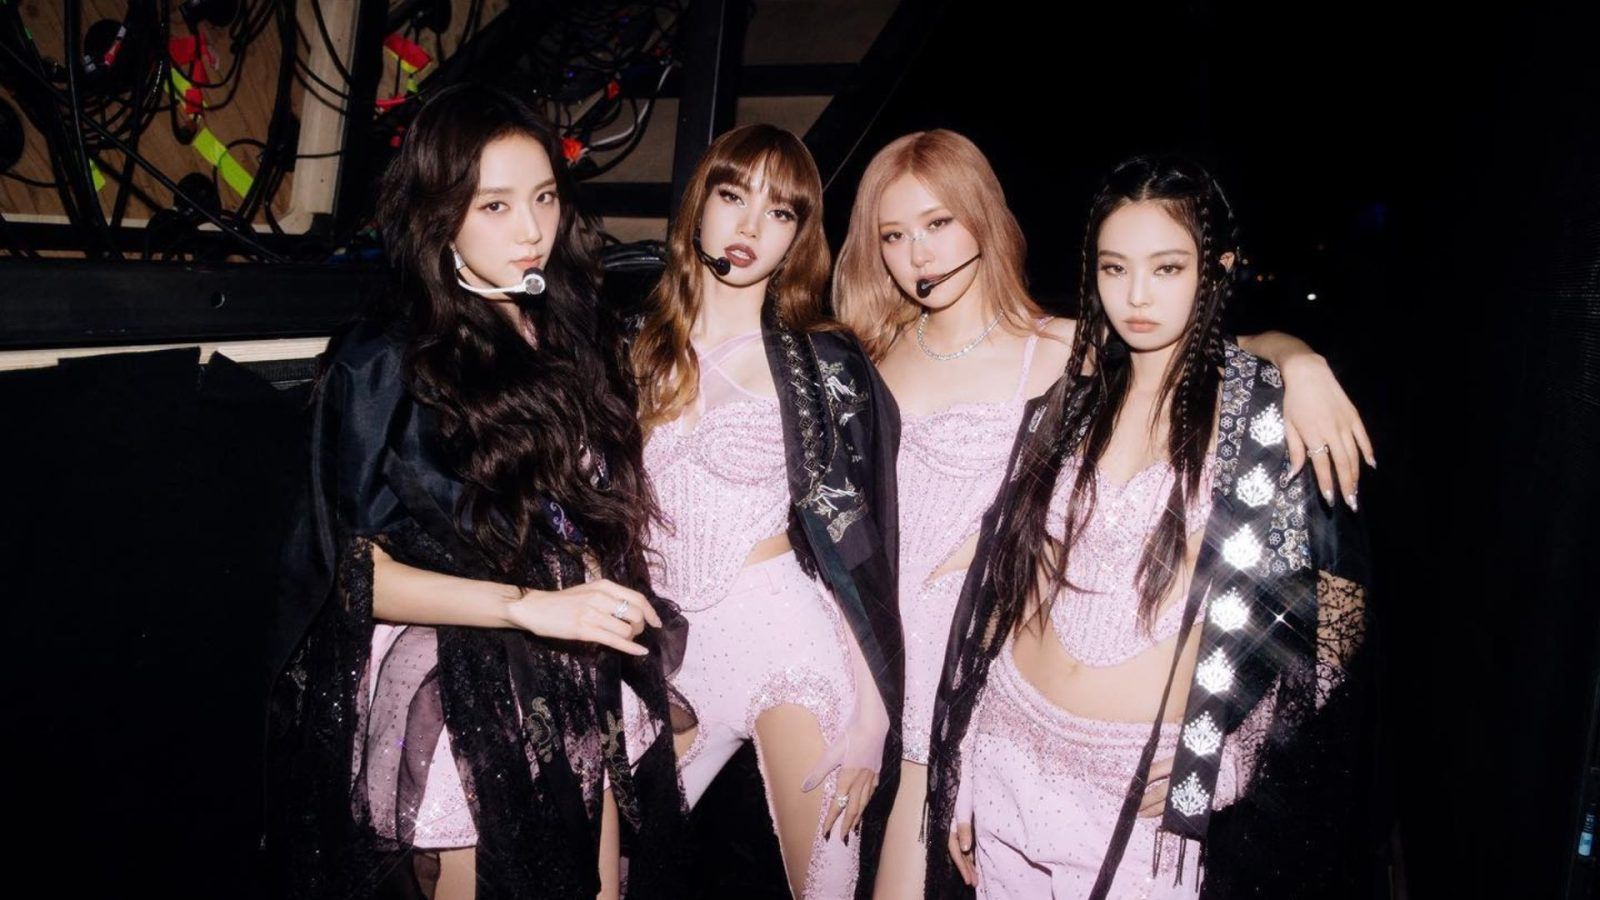 How Blackpink Became The Biggest K-Pop Girl Band On The Planet